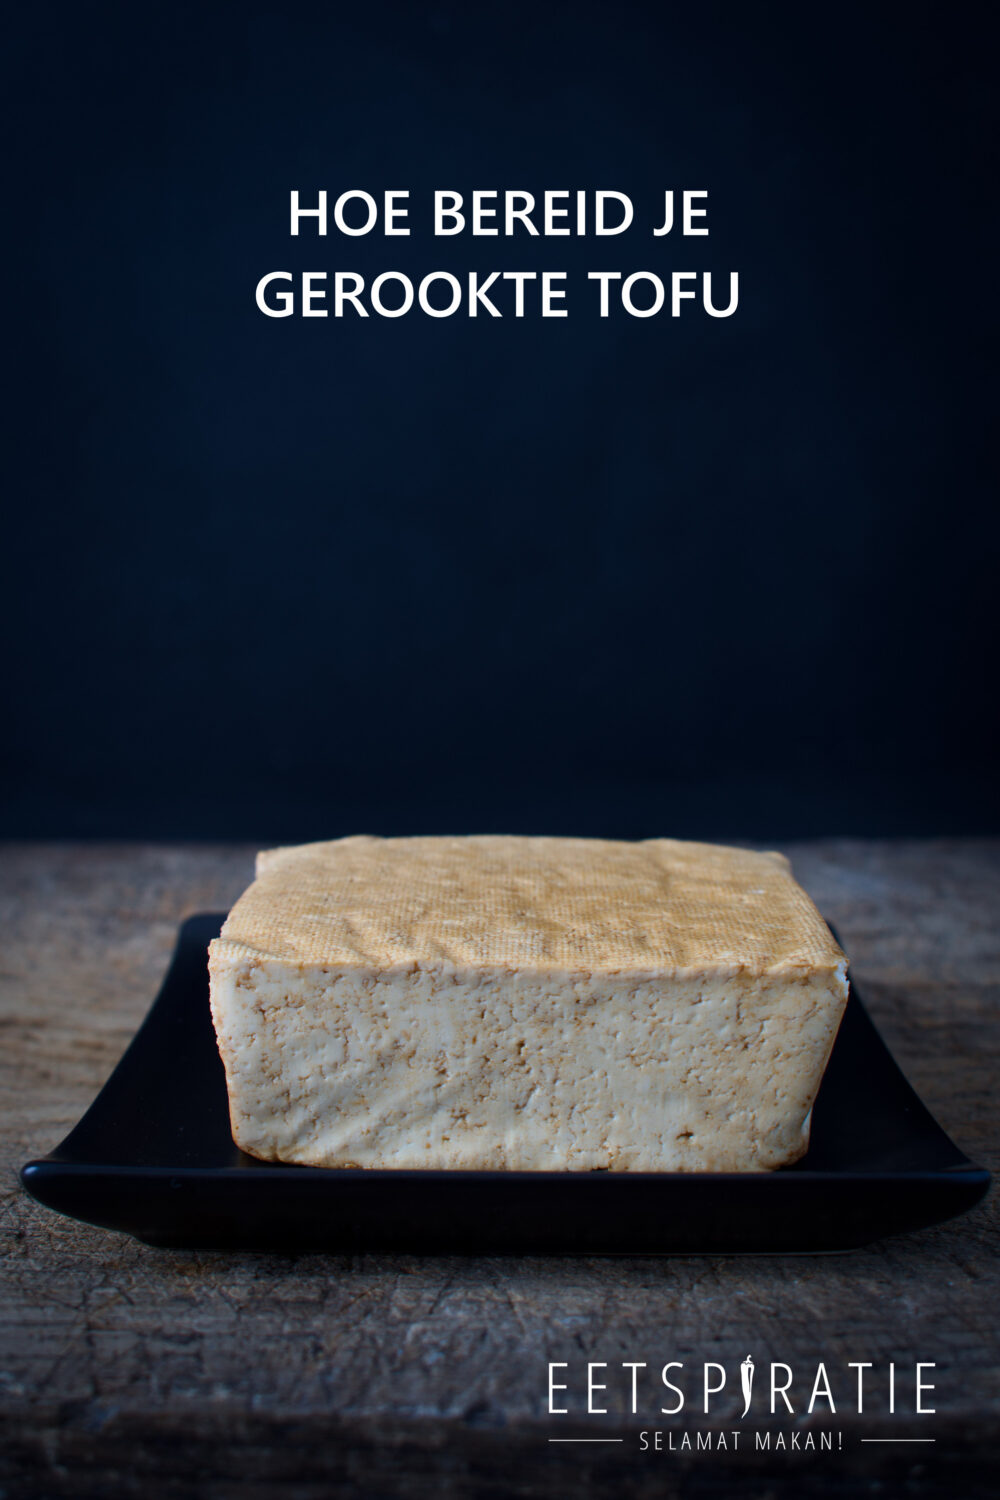 Hoe bereid je gerookte tofu